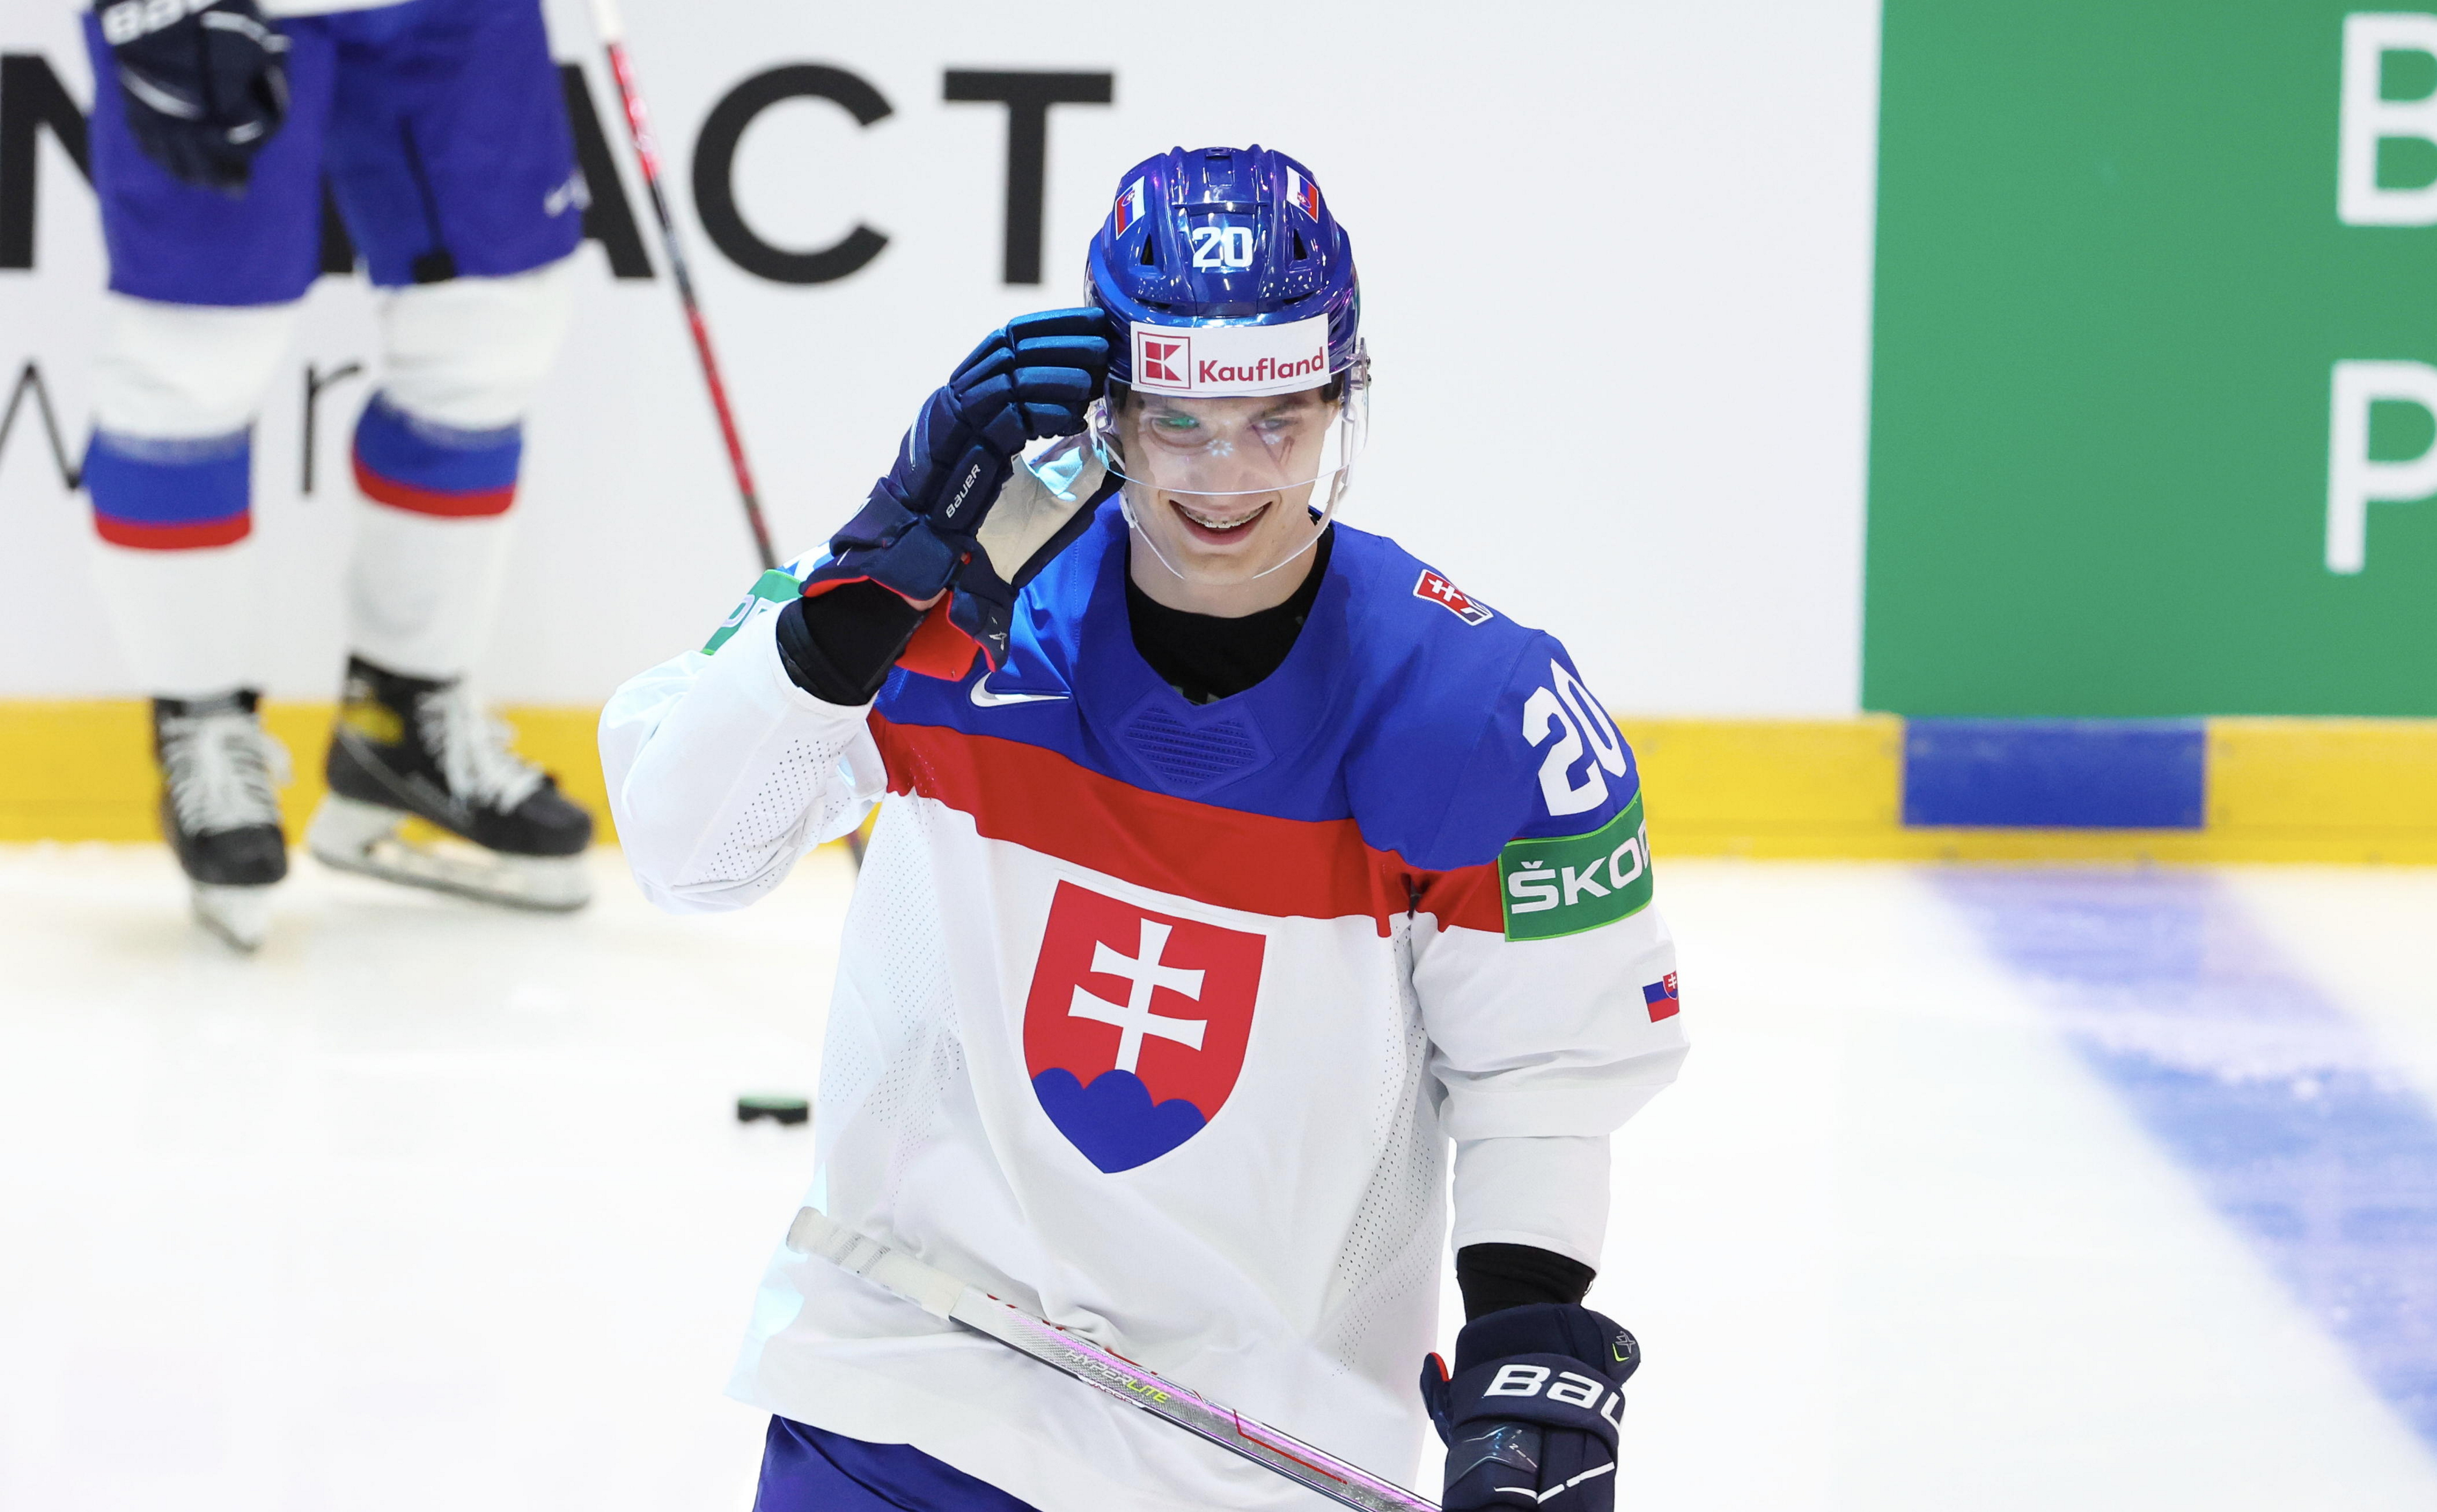 2022 NHL Draft #4: Juraj Slafkovsky Scouting Report